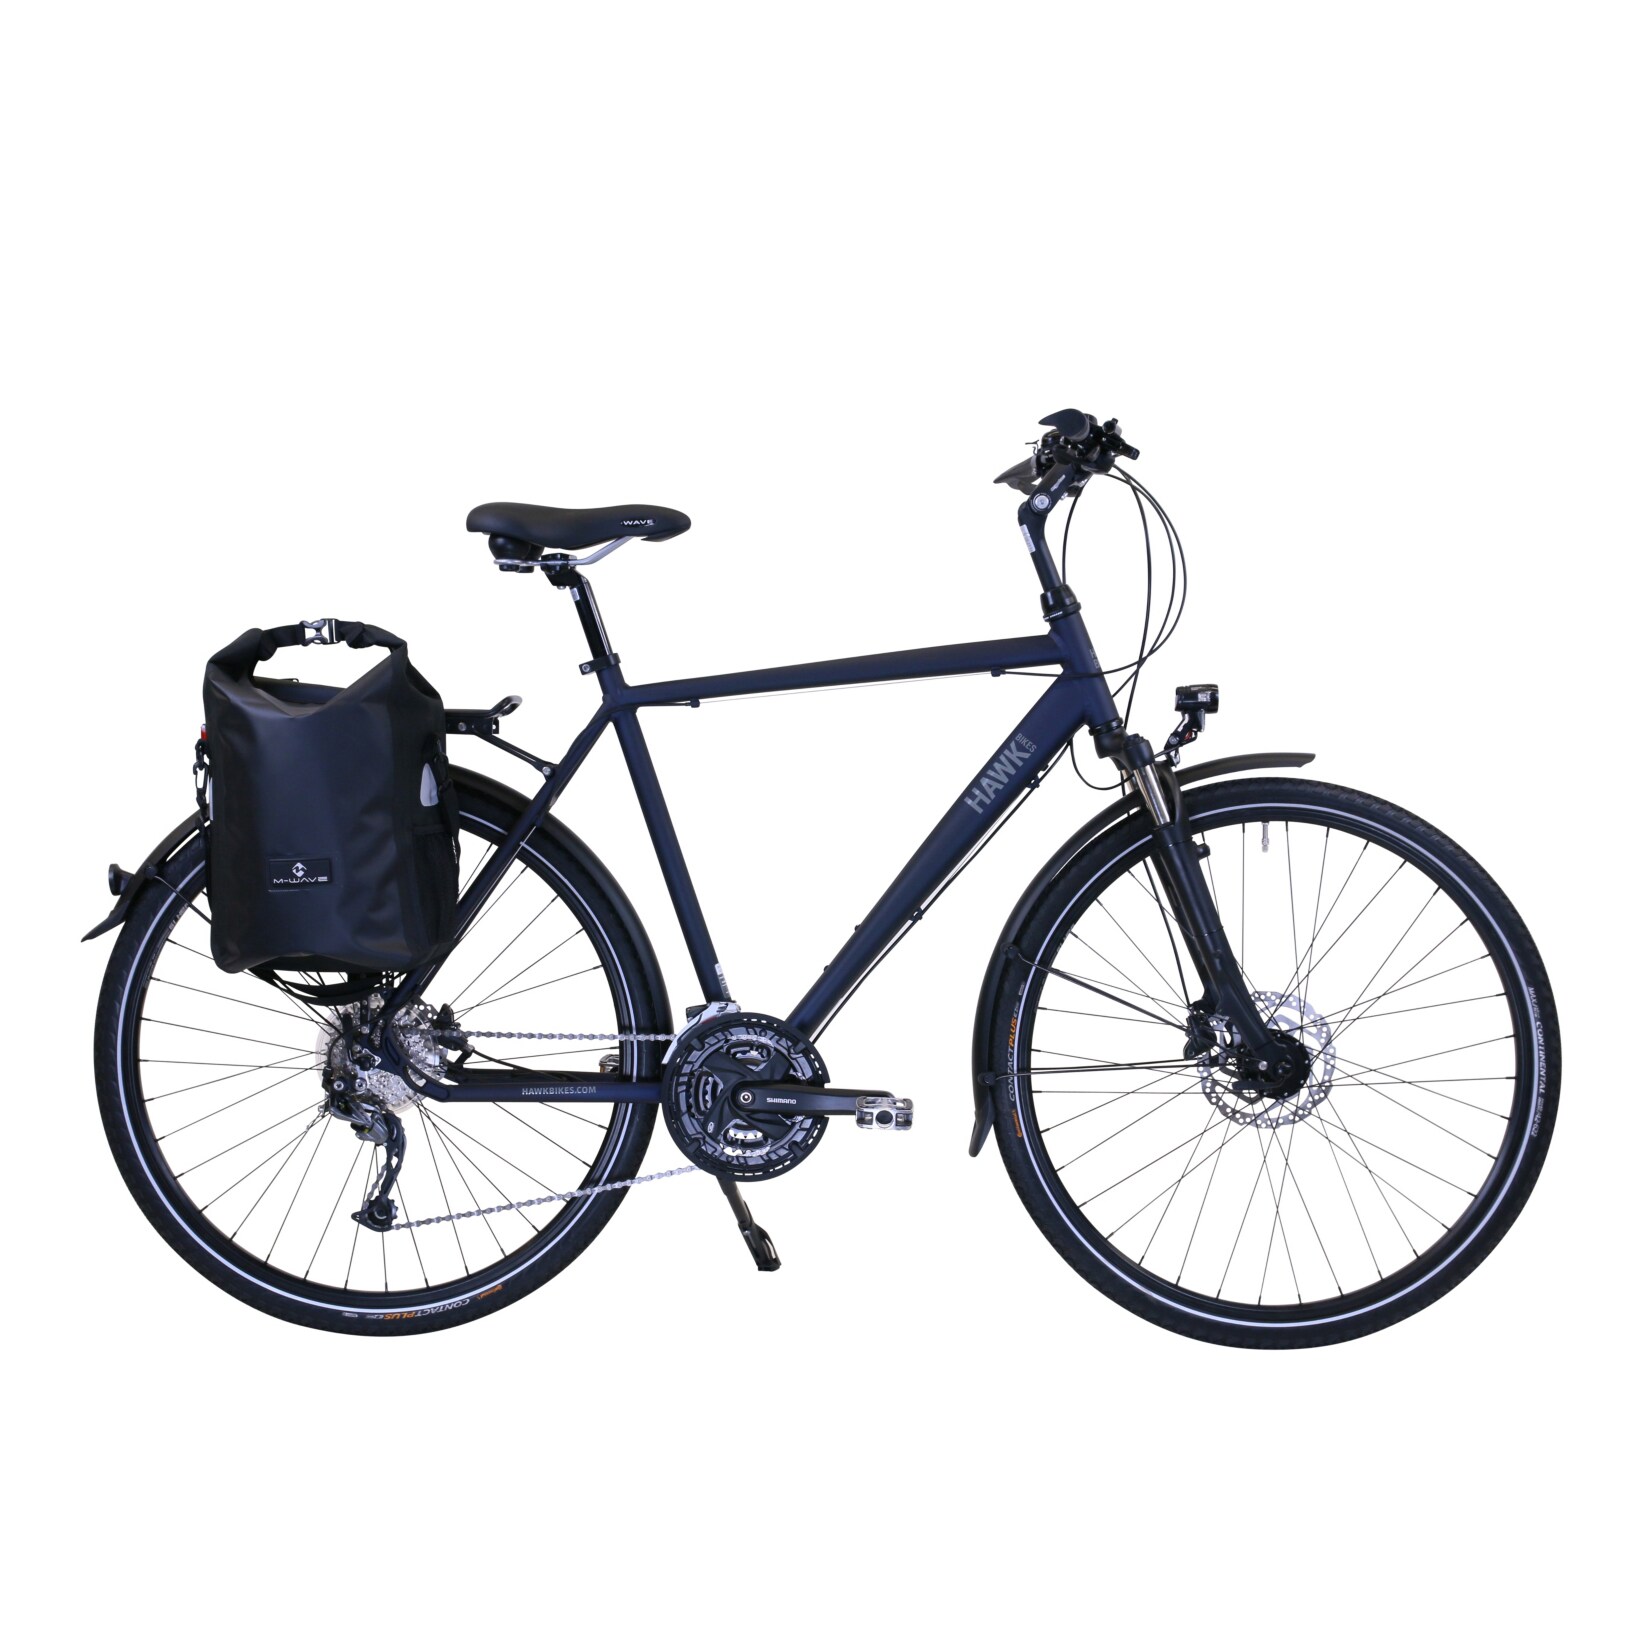 HAWK Trekking Deluxe mit Tasche ,Ocean Blue Herren 28 Zoll -  Rahmenhöhe 57cm , Fahrrad mit Microshift 27 Gang Kettensch